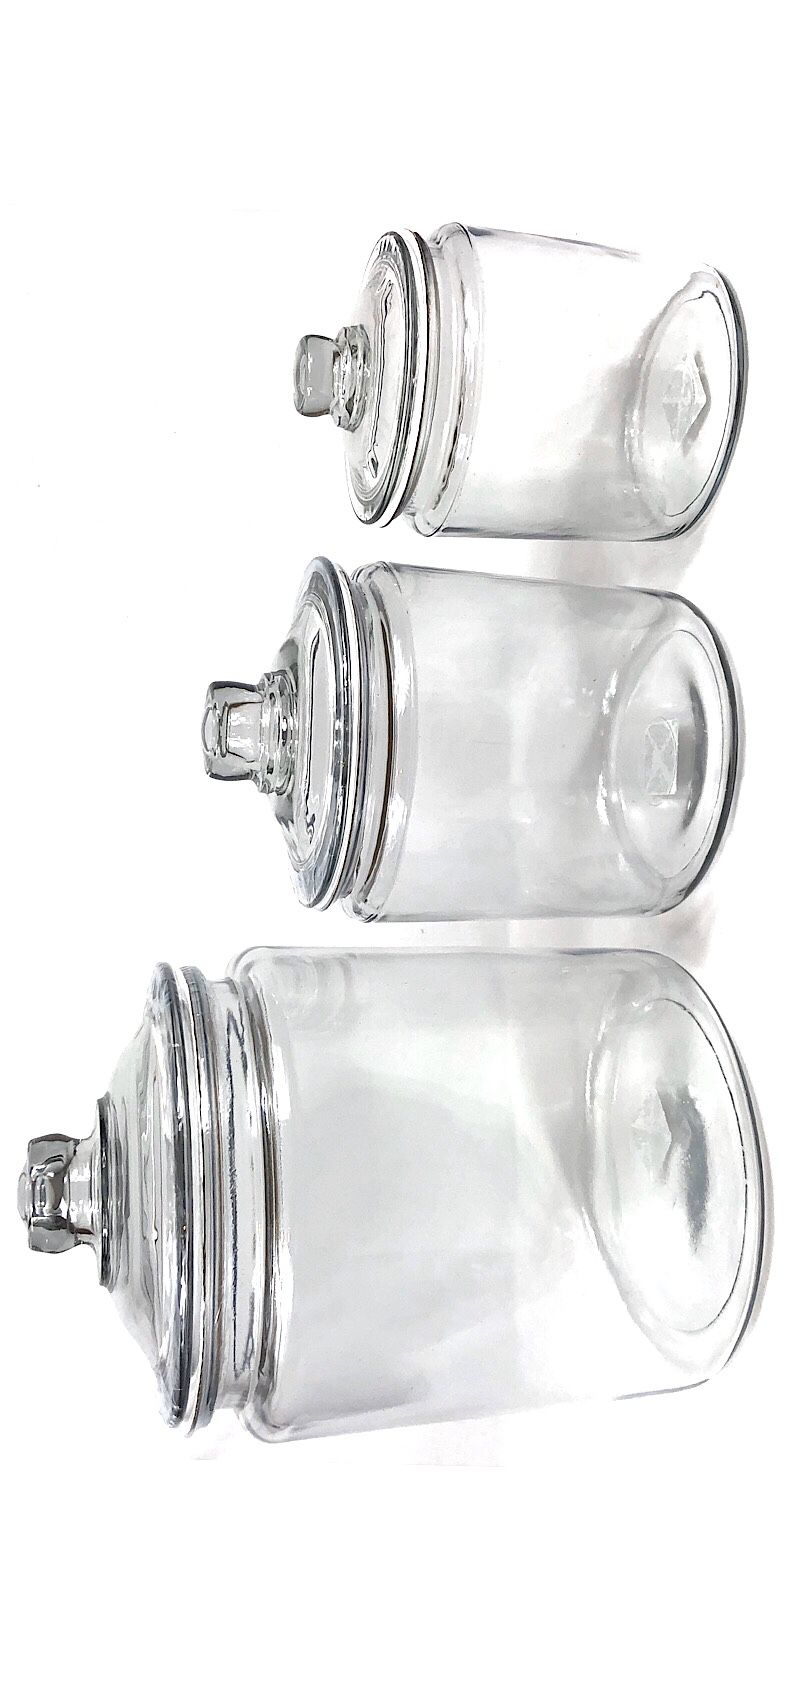 🎄🎁 Glass Storage Jars (2 gallon, 1 gallon & 0.5 gallon jars)- Brand New